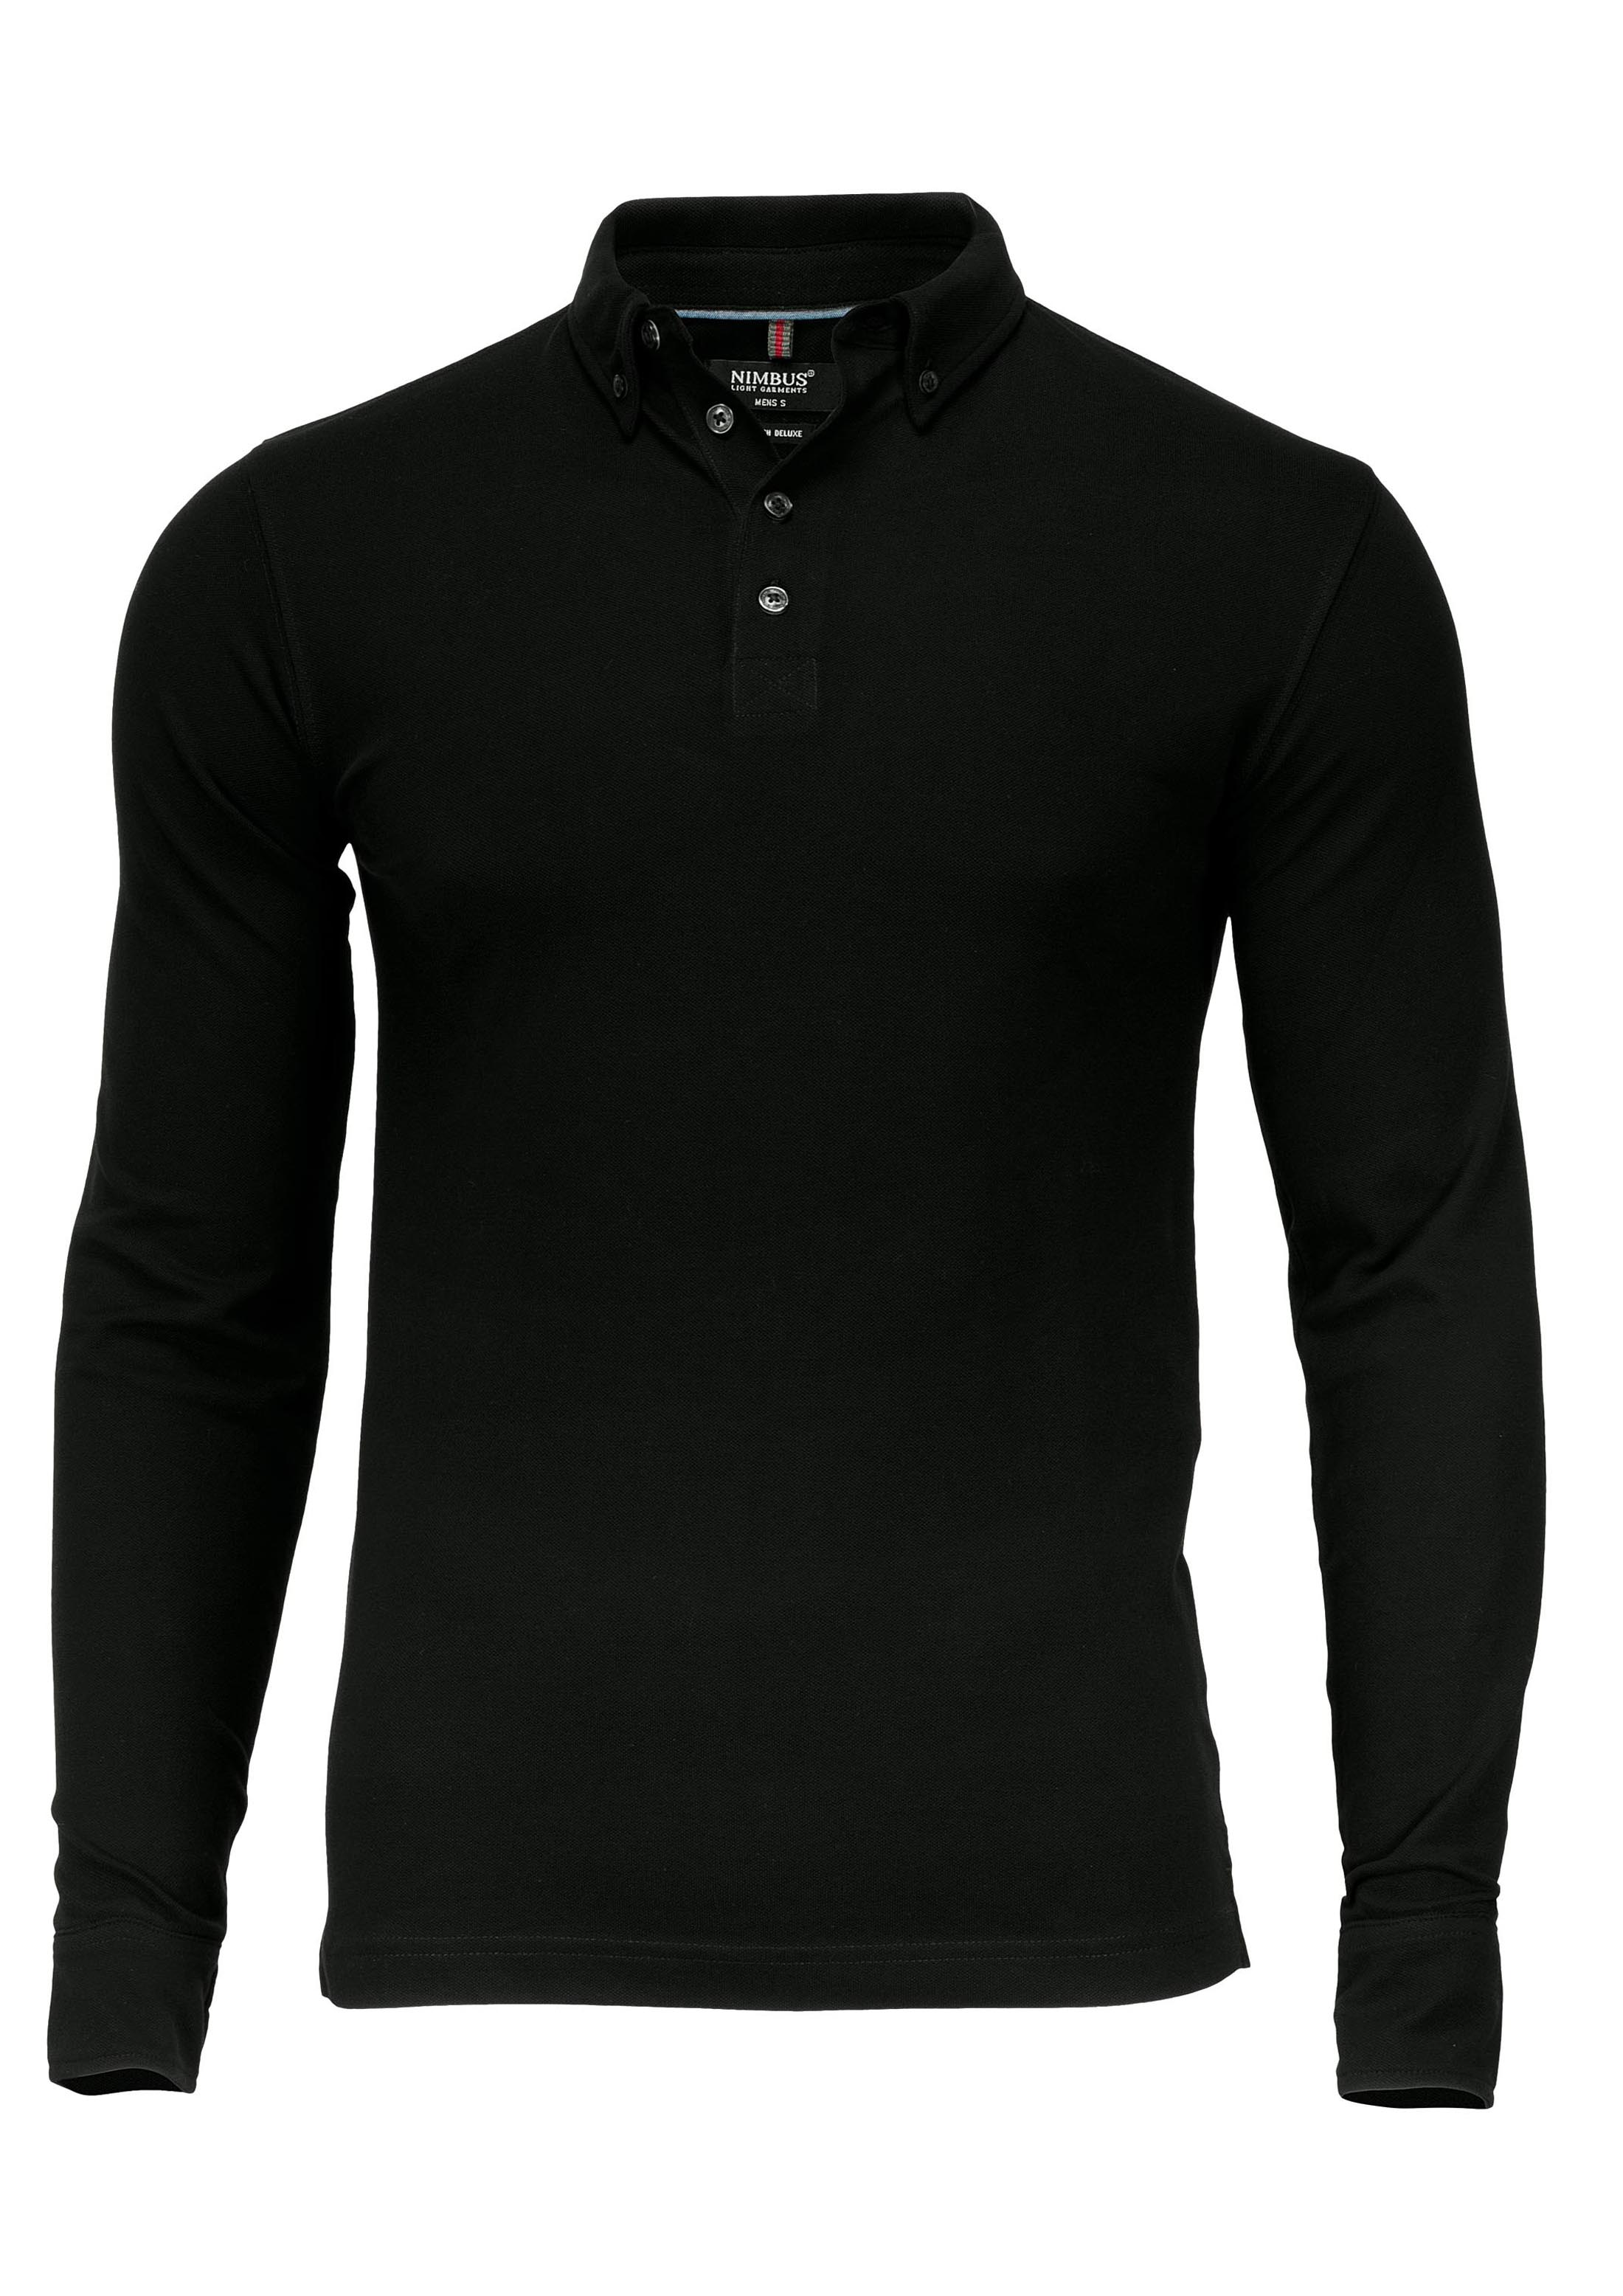 Men's organic cotton polo shirt long sleeve 230 g/m² Carlington Nimbus® Black S